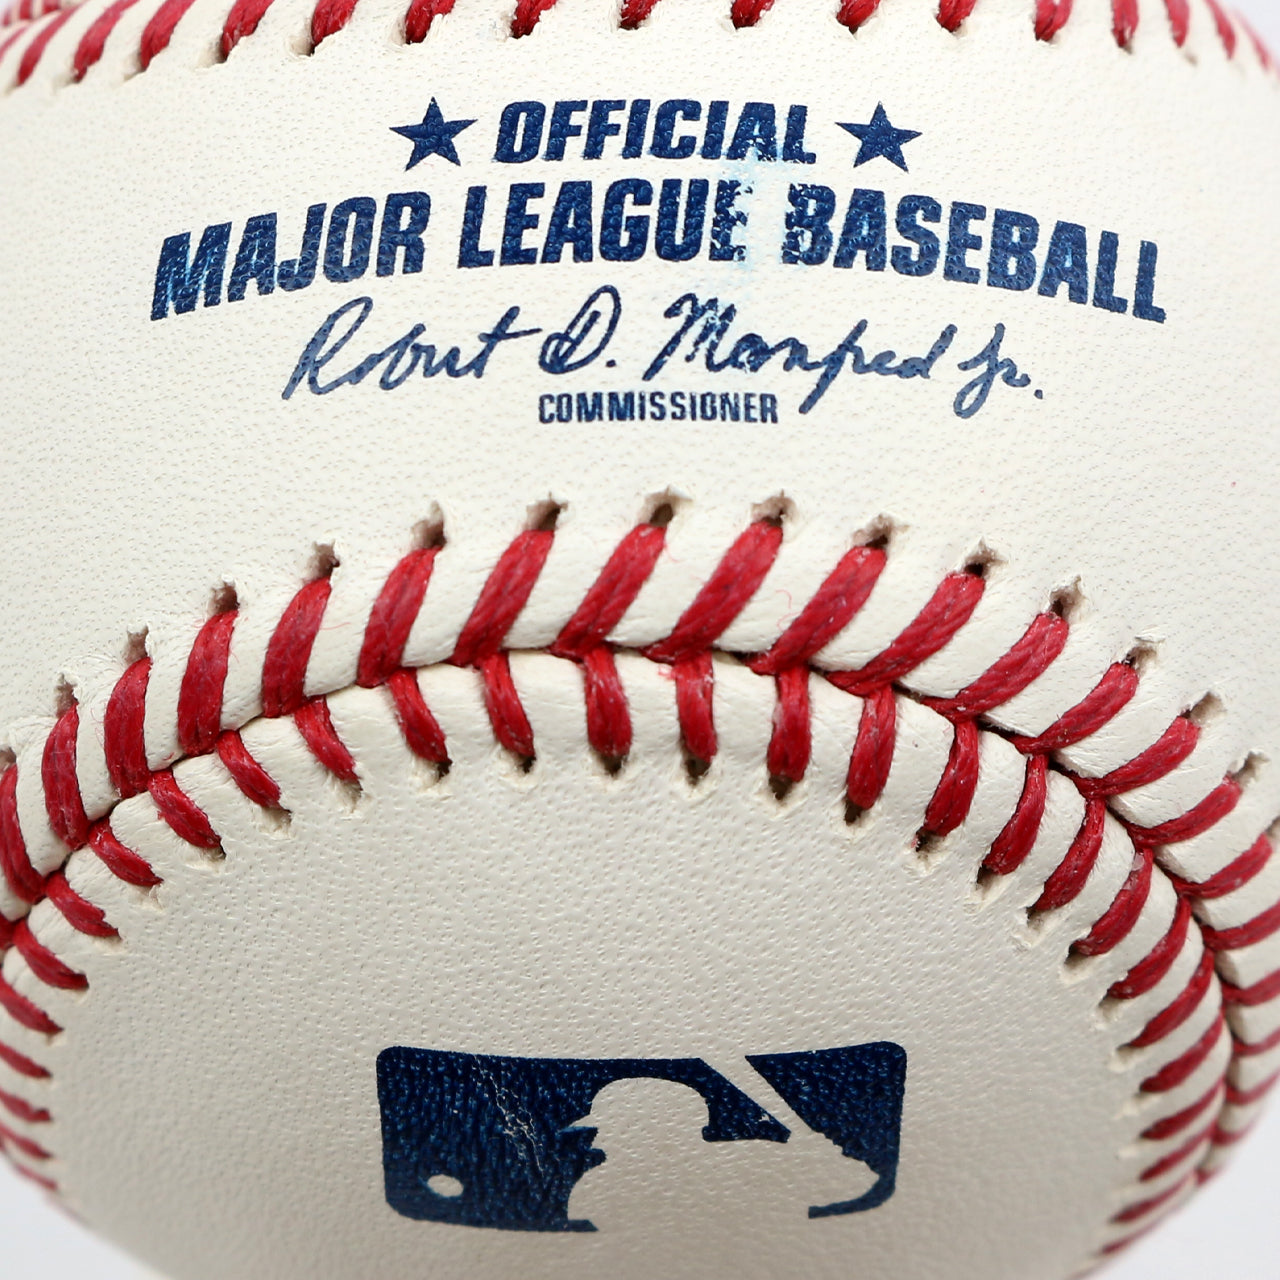 David Cone Signed Official Major League Baseball